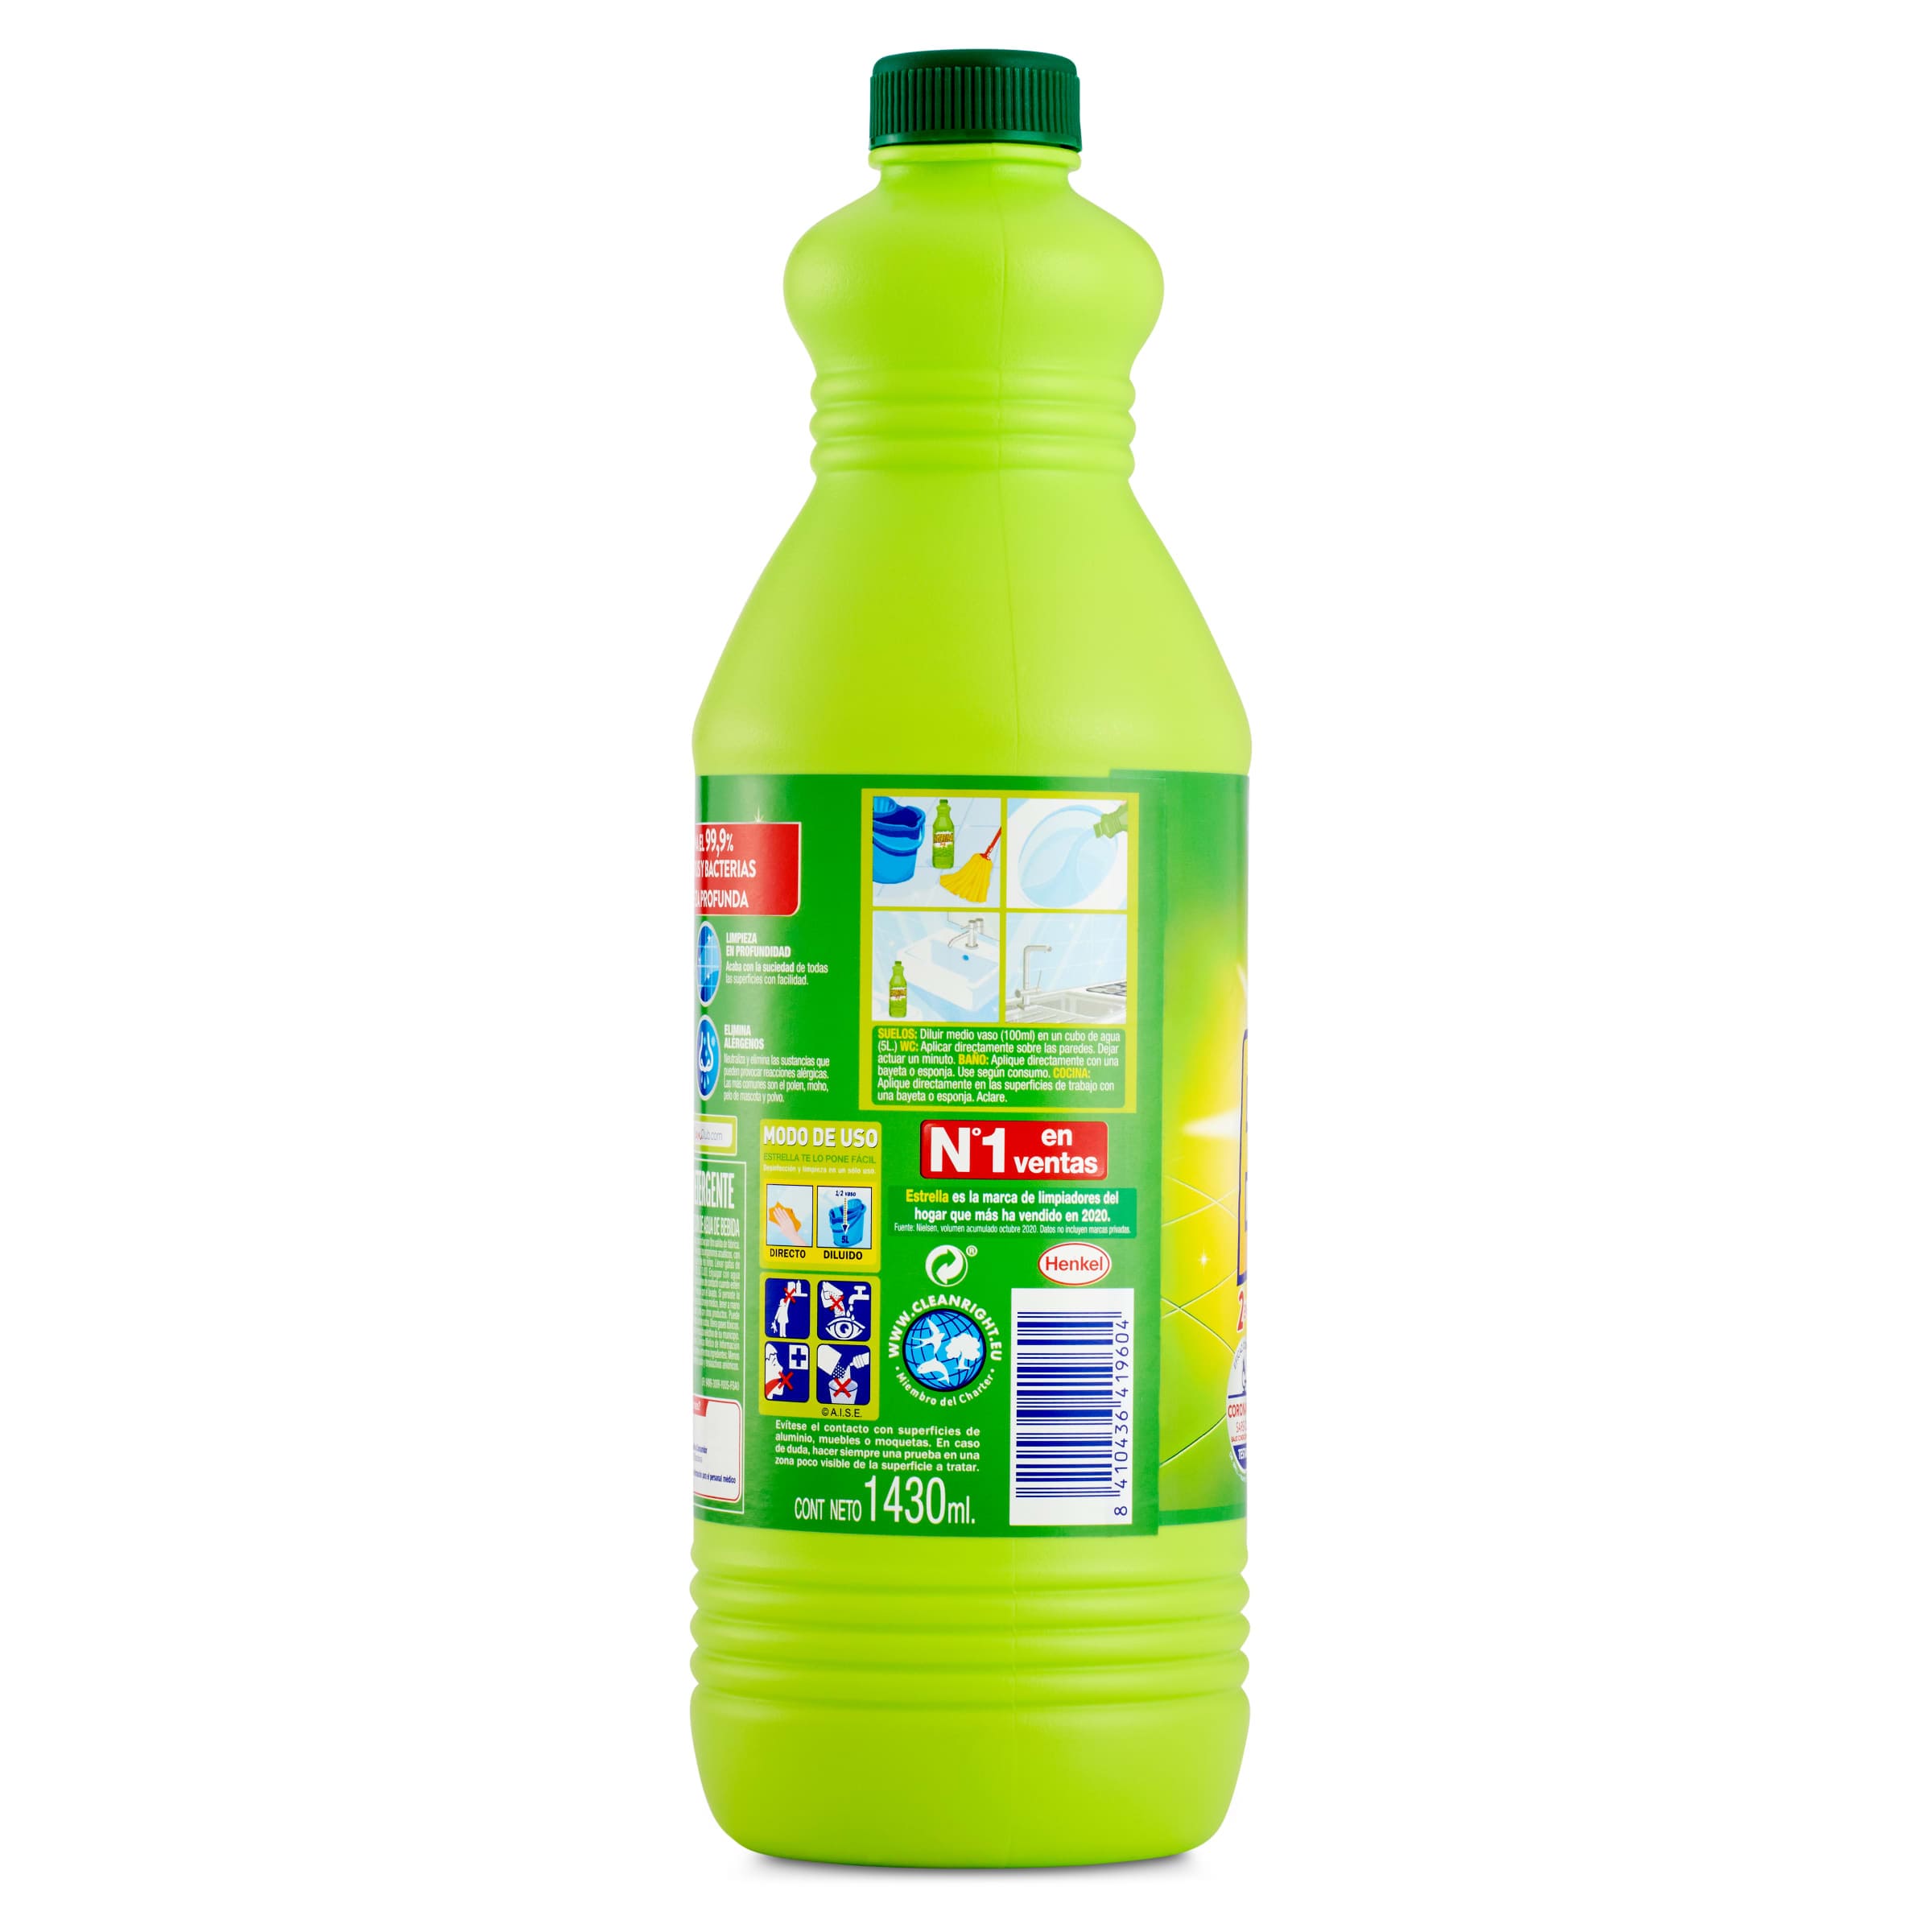 Comprar Lejia limon estrella 1,43l en Supermercados MAS Online